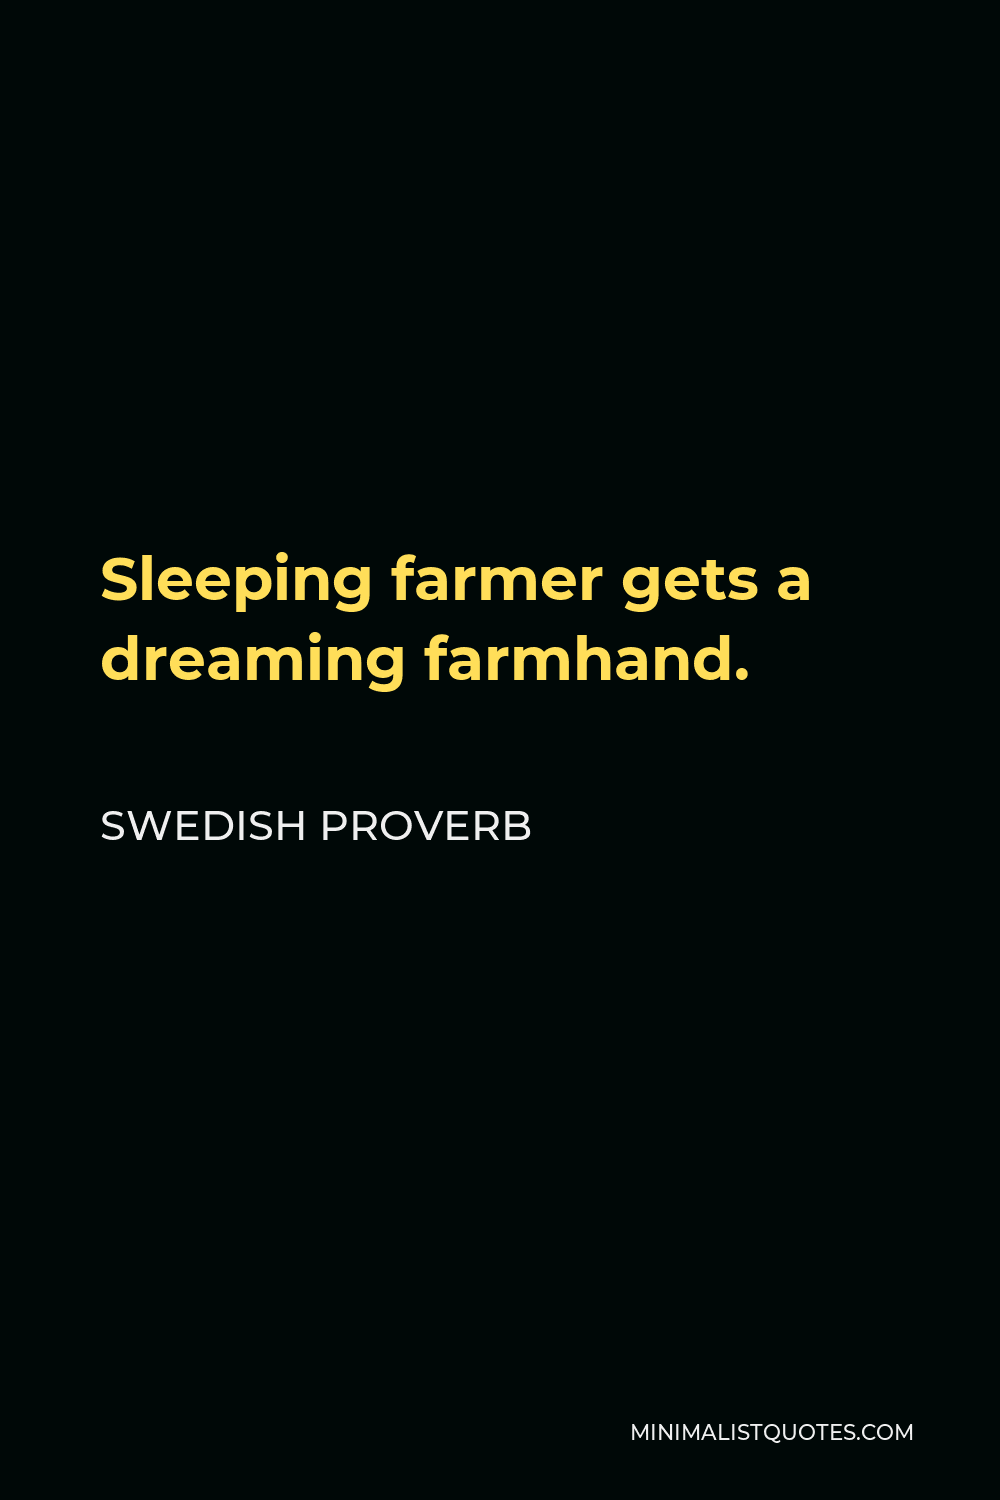 Swedish Proverb Quote - Sleeping farmer gets a dreaming farmhand.